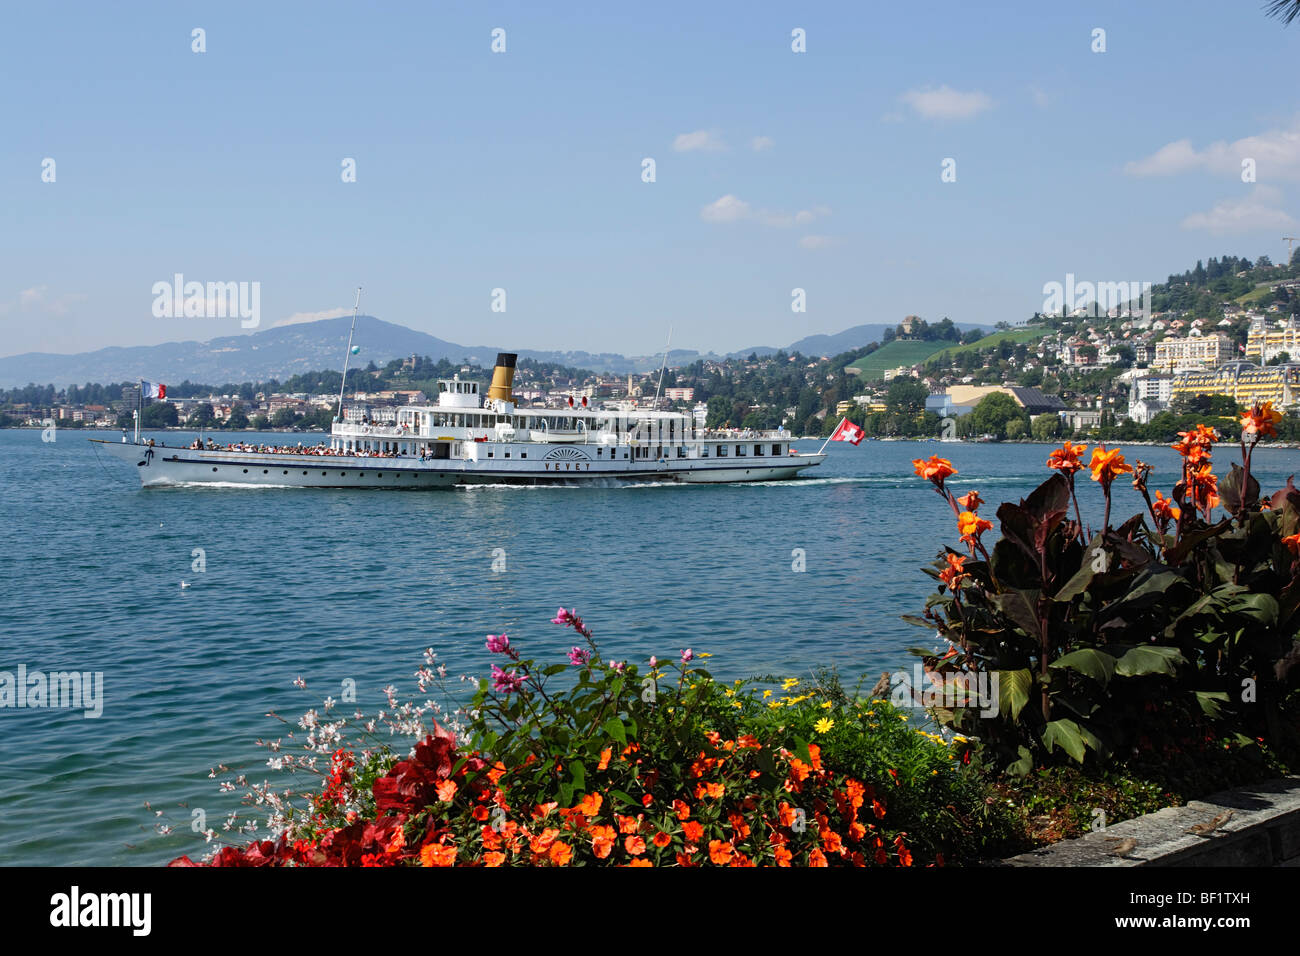 Pleasure boat on lake Geneva, Montreux, Canton of Vaud, Switzerland Stock Photo